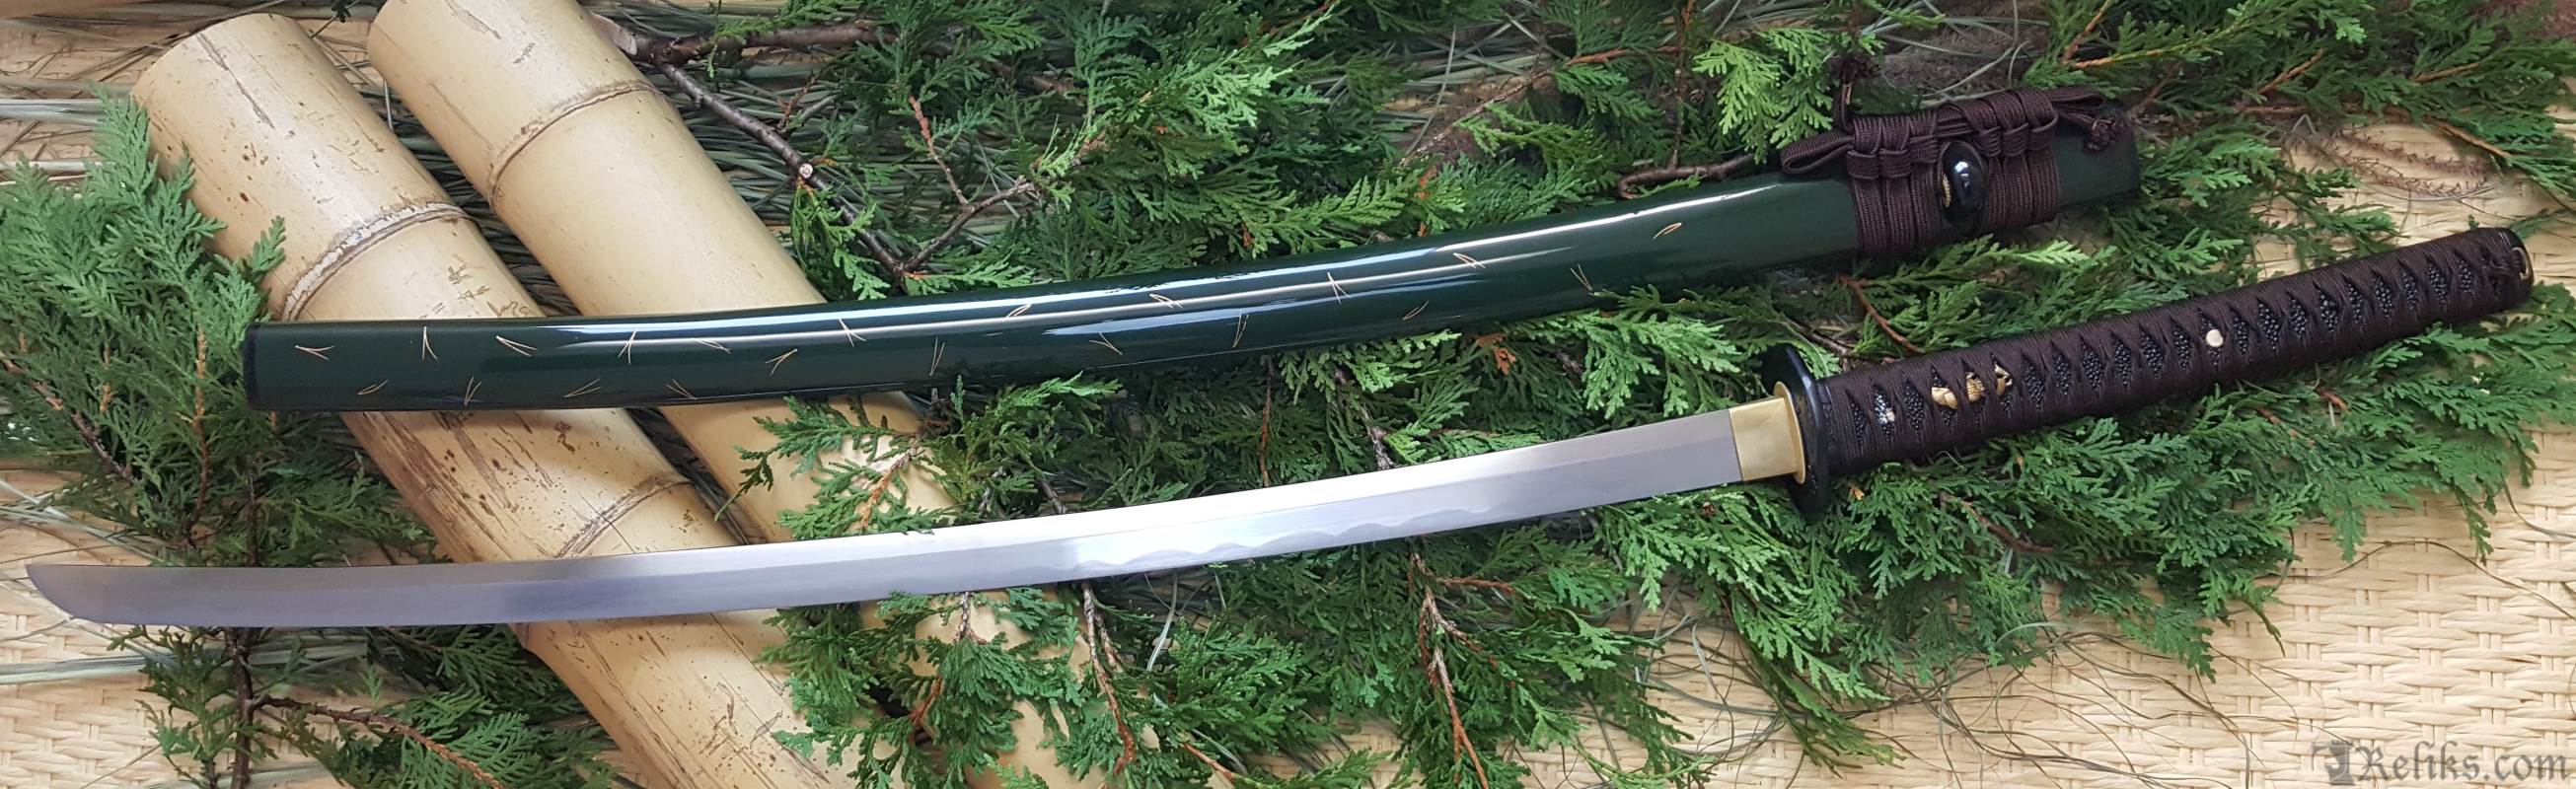 Old Pine Samurai Sword